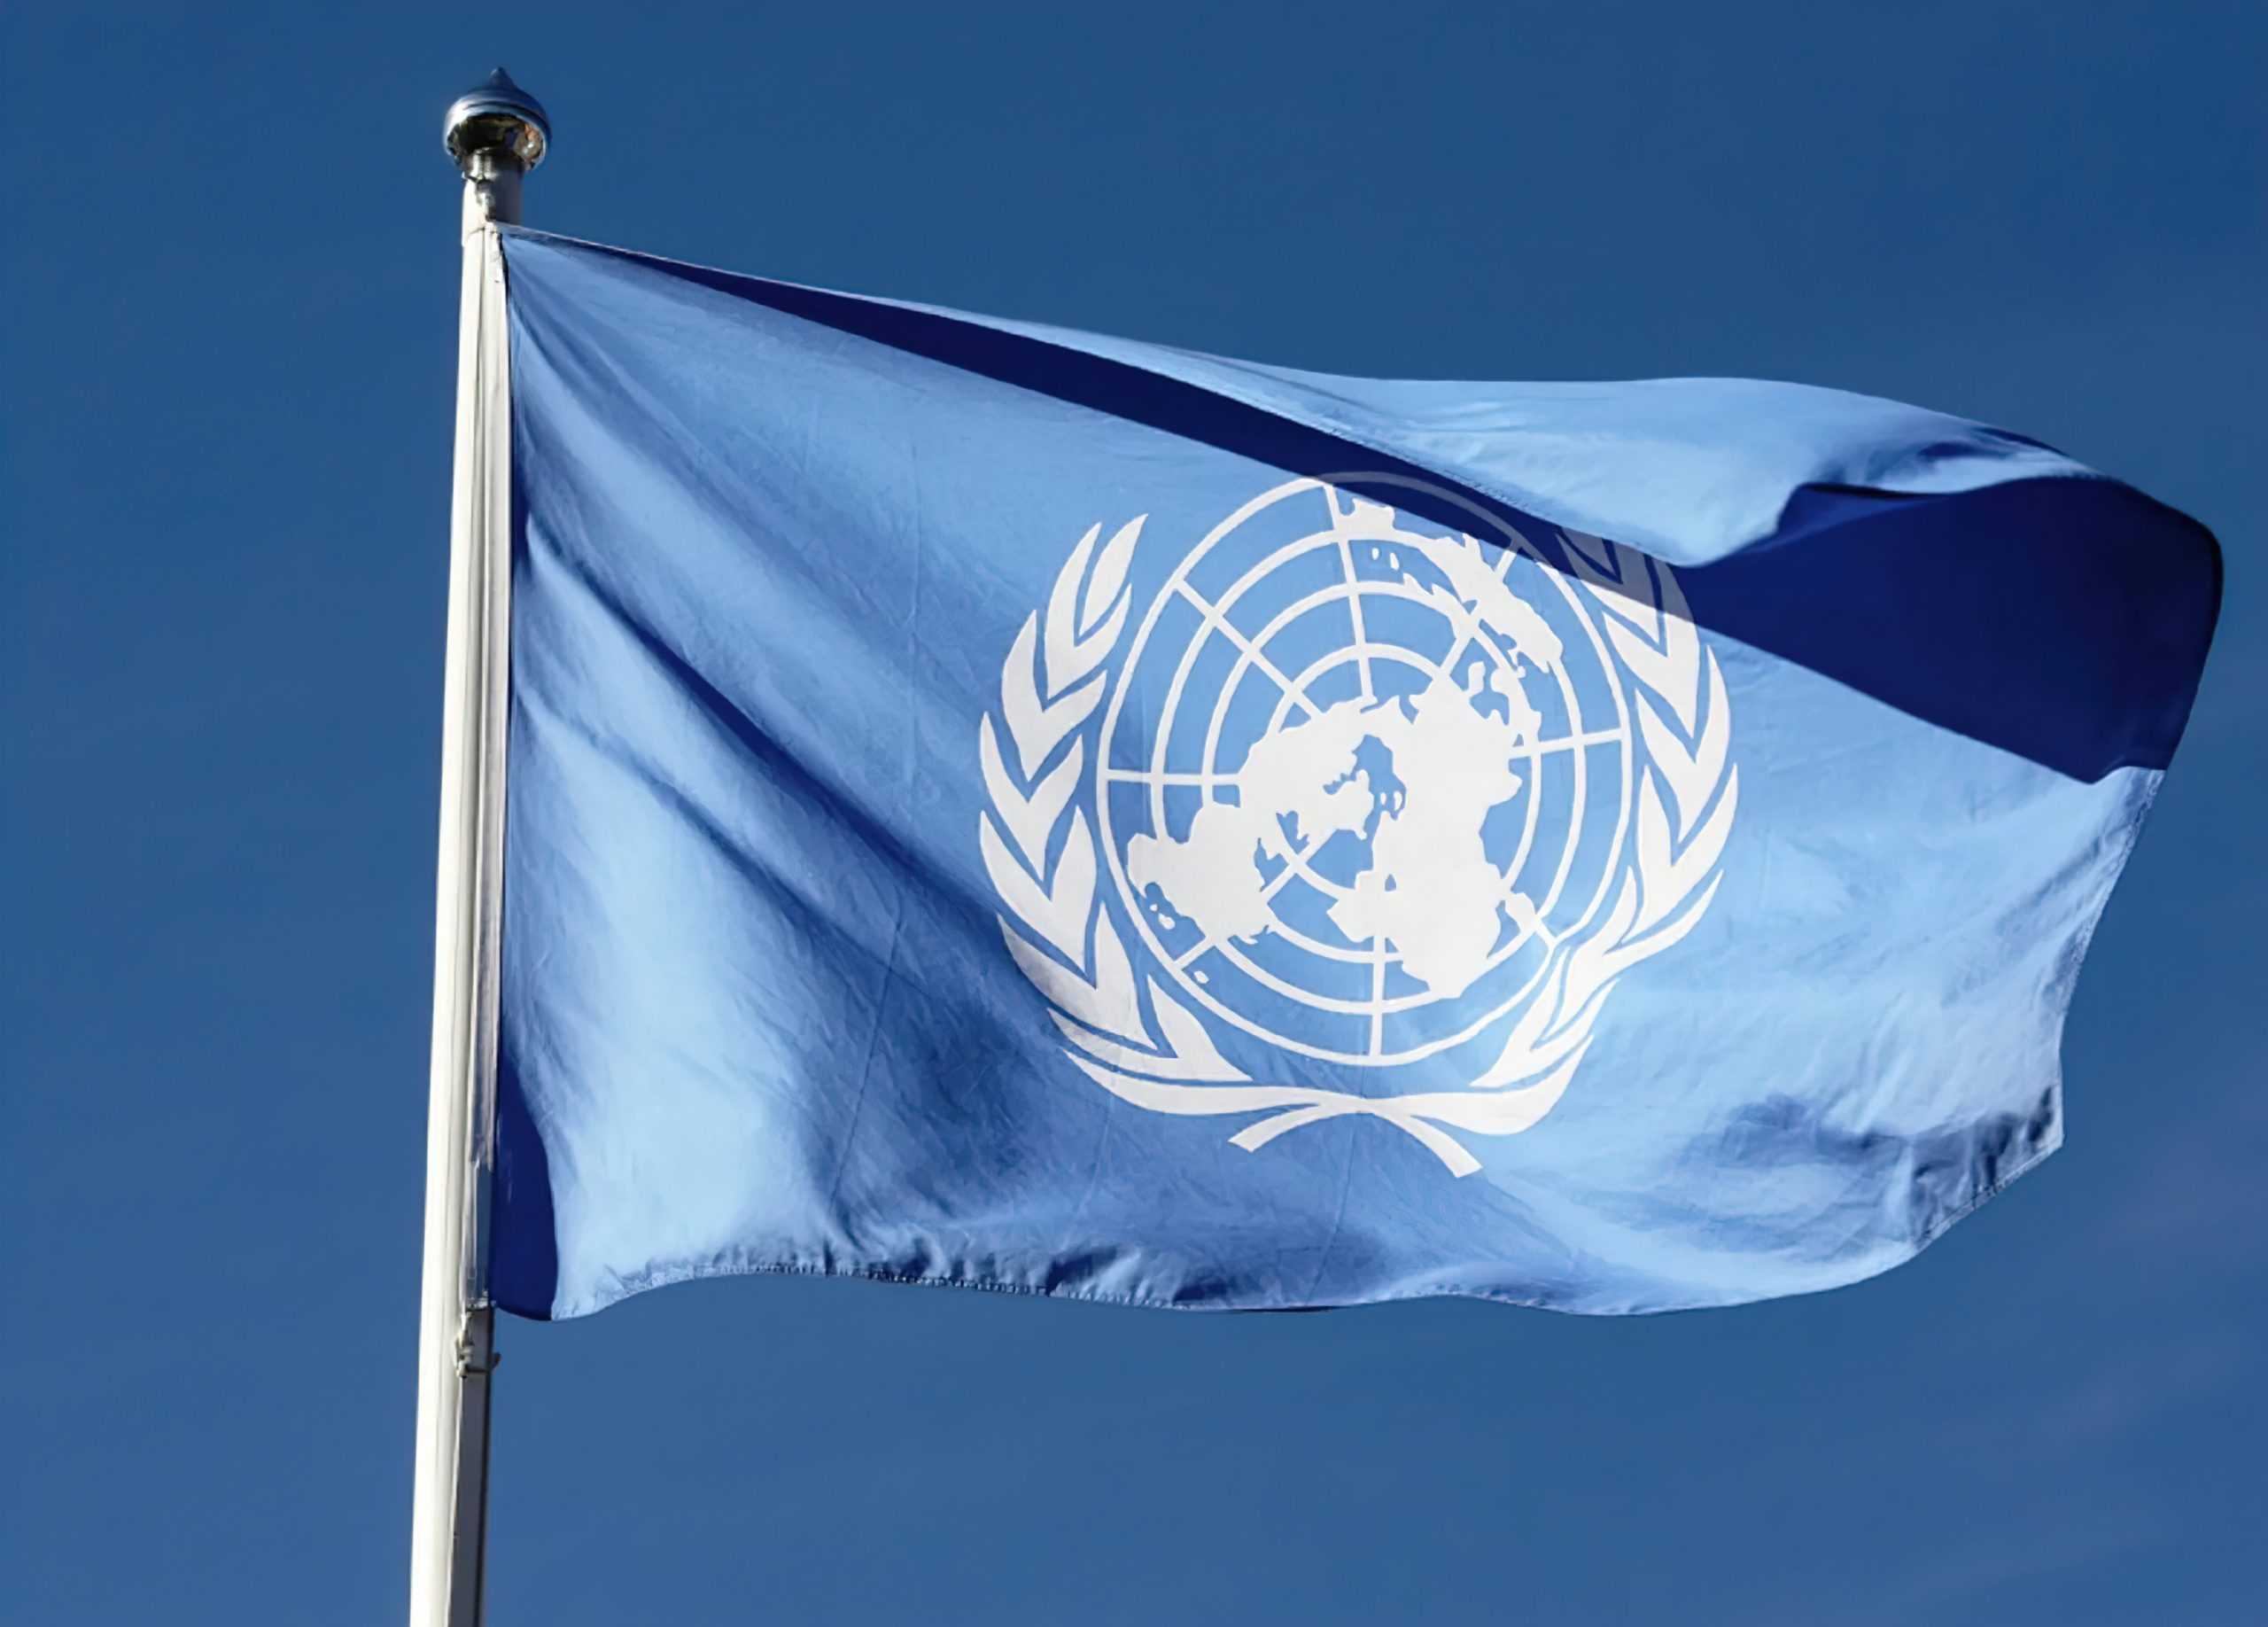 Е оон. Организация Объединенных наций (ООН). Флаг ООН. Международные организации ООН. Совбез ООН флаг.